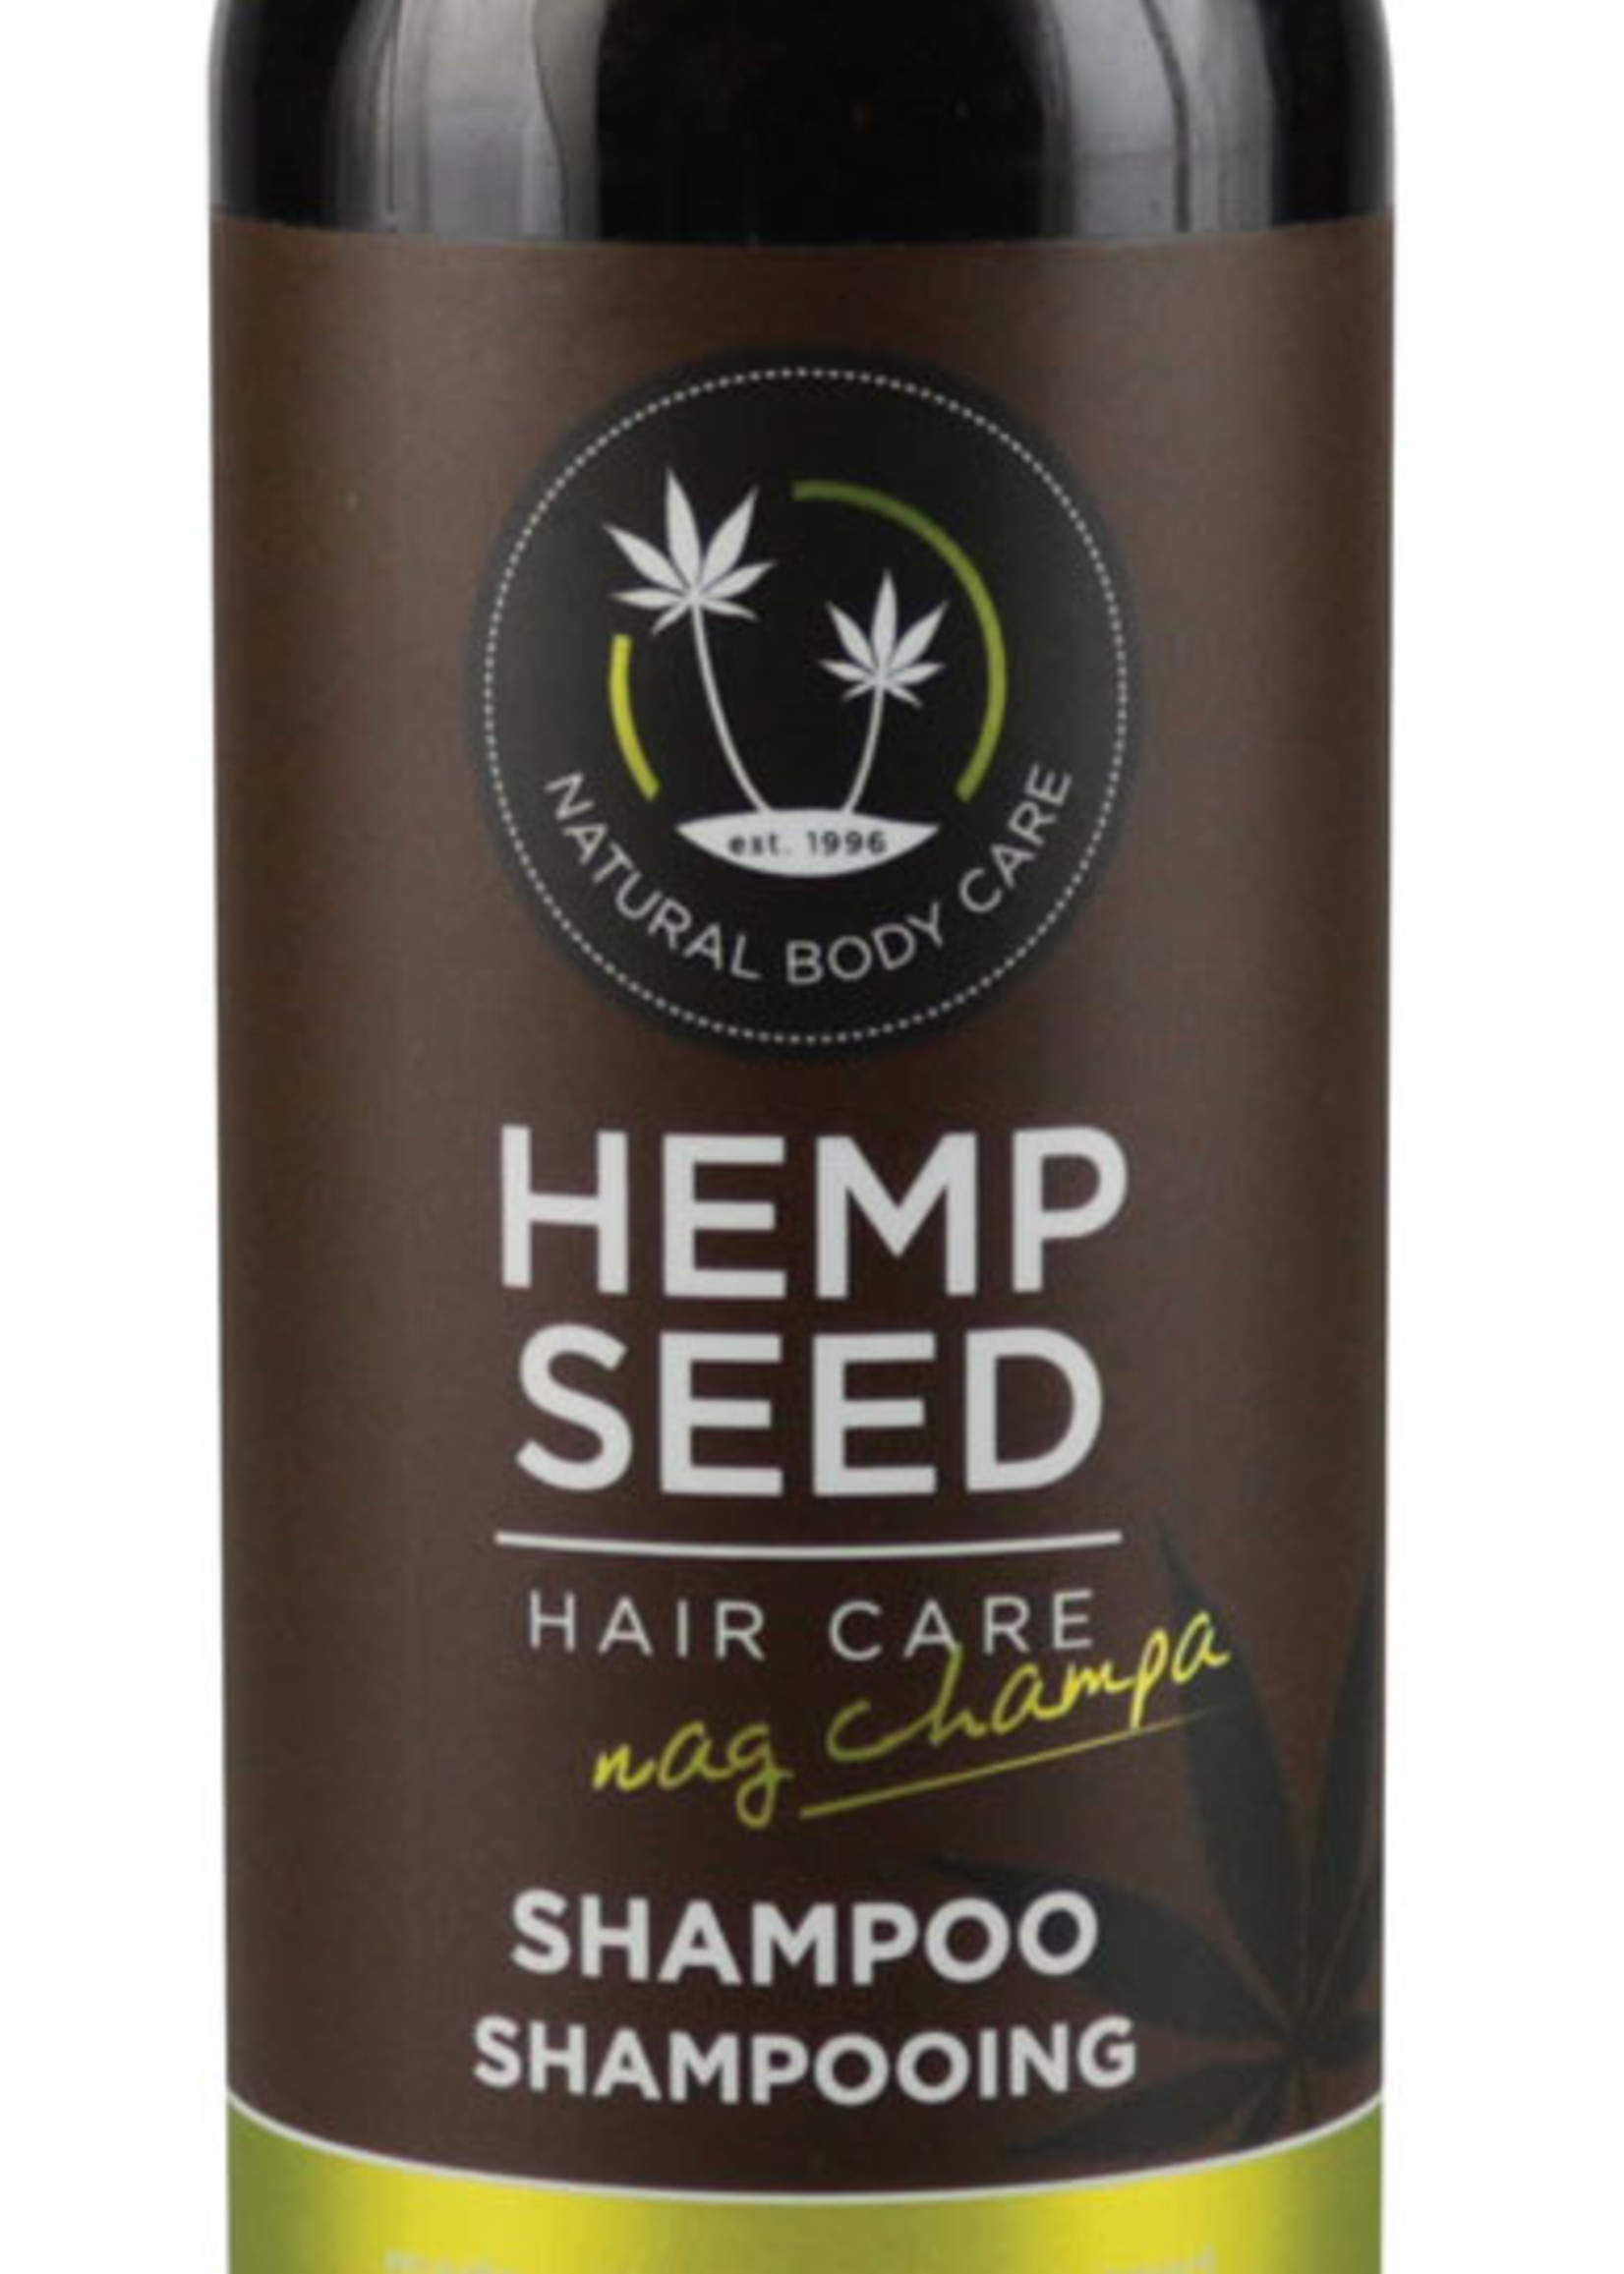 Earthly Body Hemp Seed Shampoo - 8oz Nag Champa